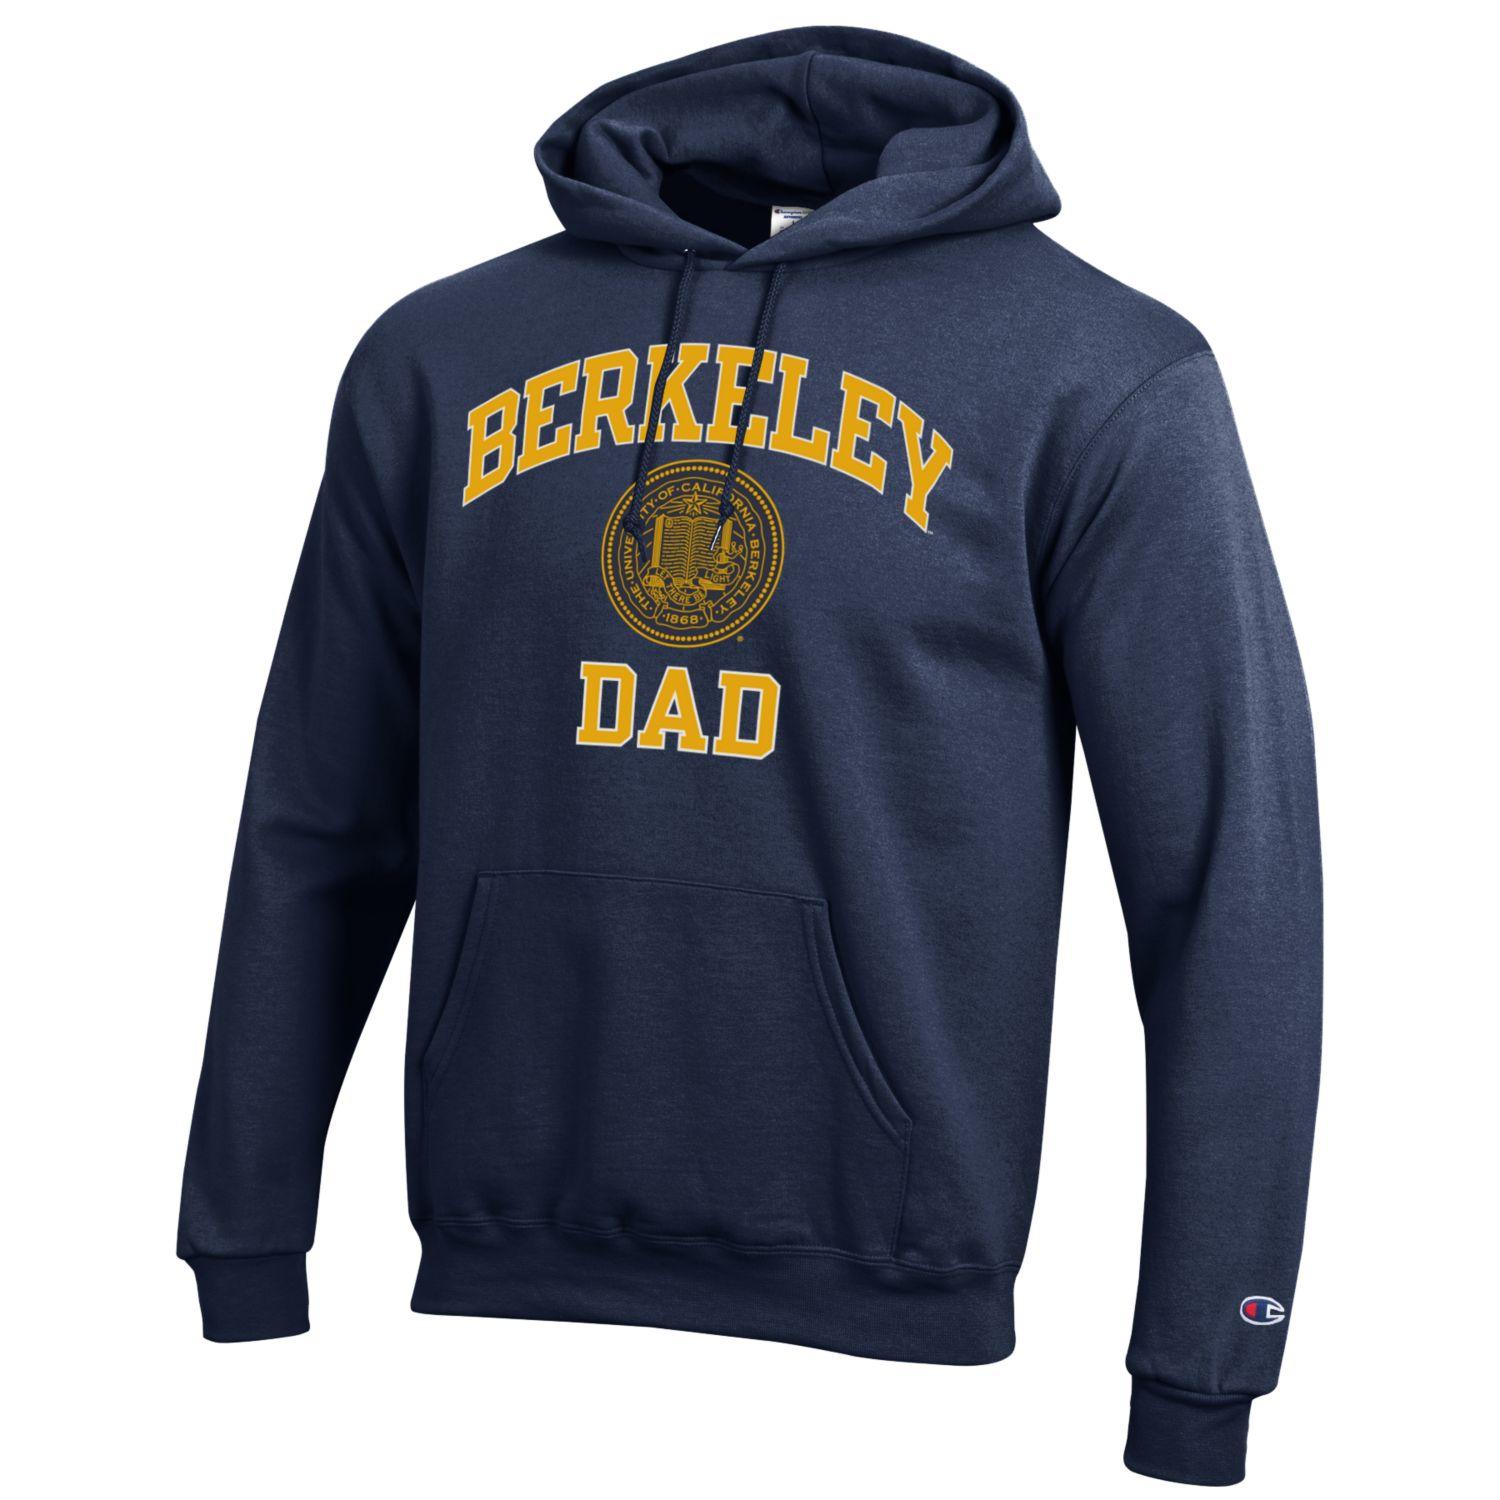 U.C. Berkeley dad arch & seal hoodie sweatshirt-Navy-Shop College Wear